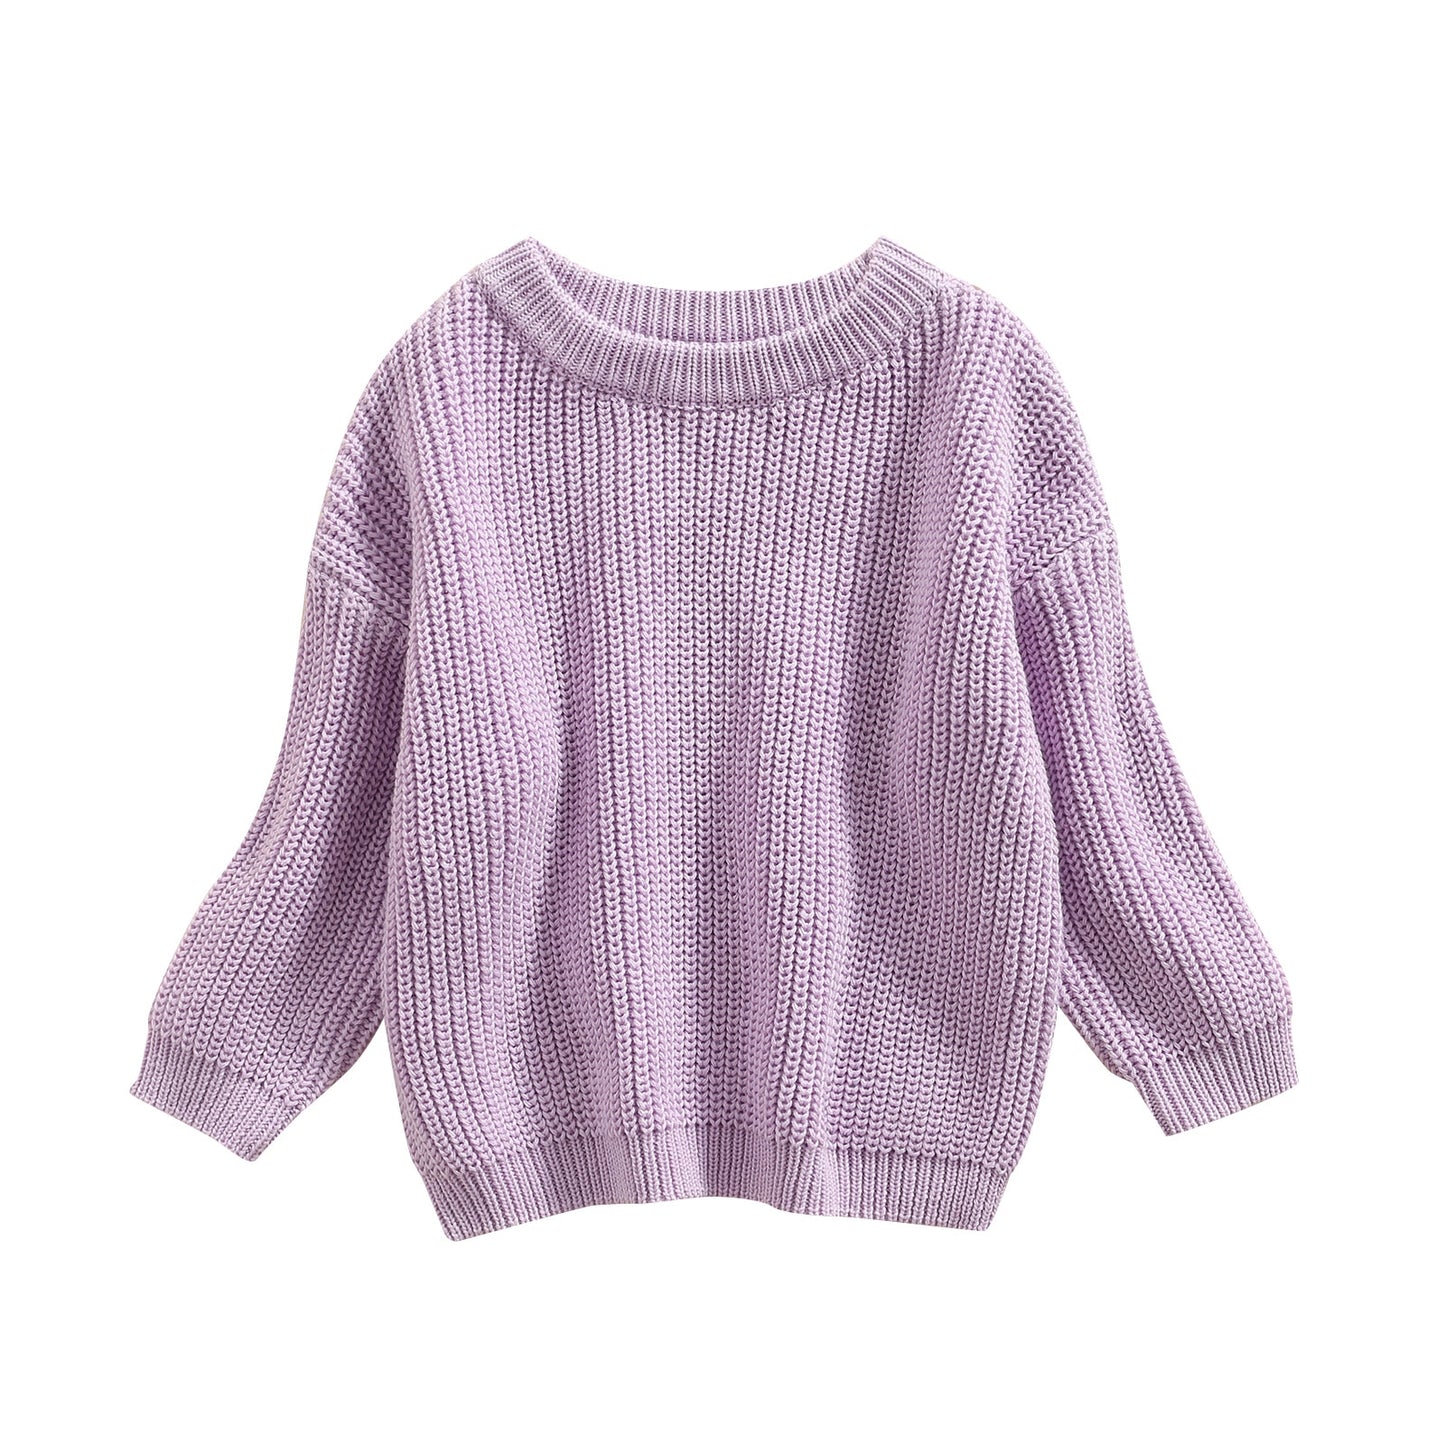 Kara's Knitted Sweater